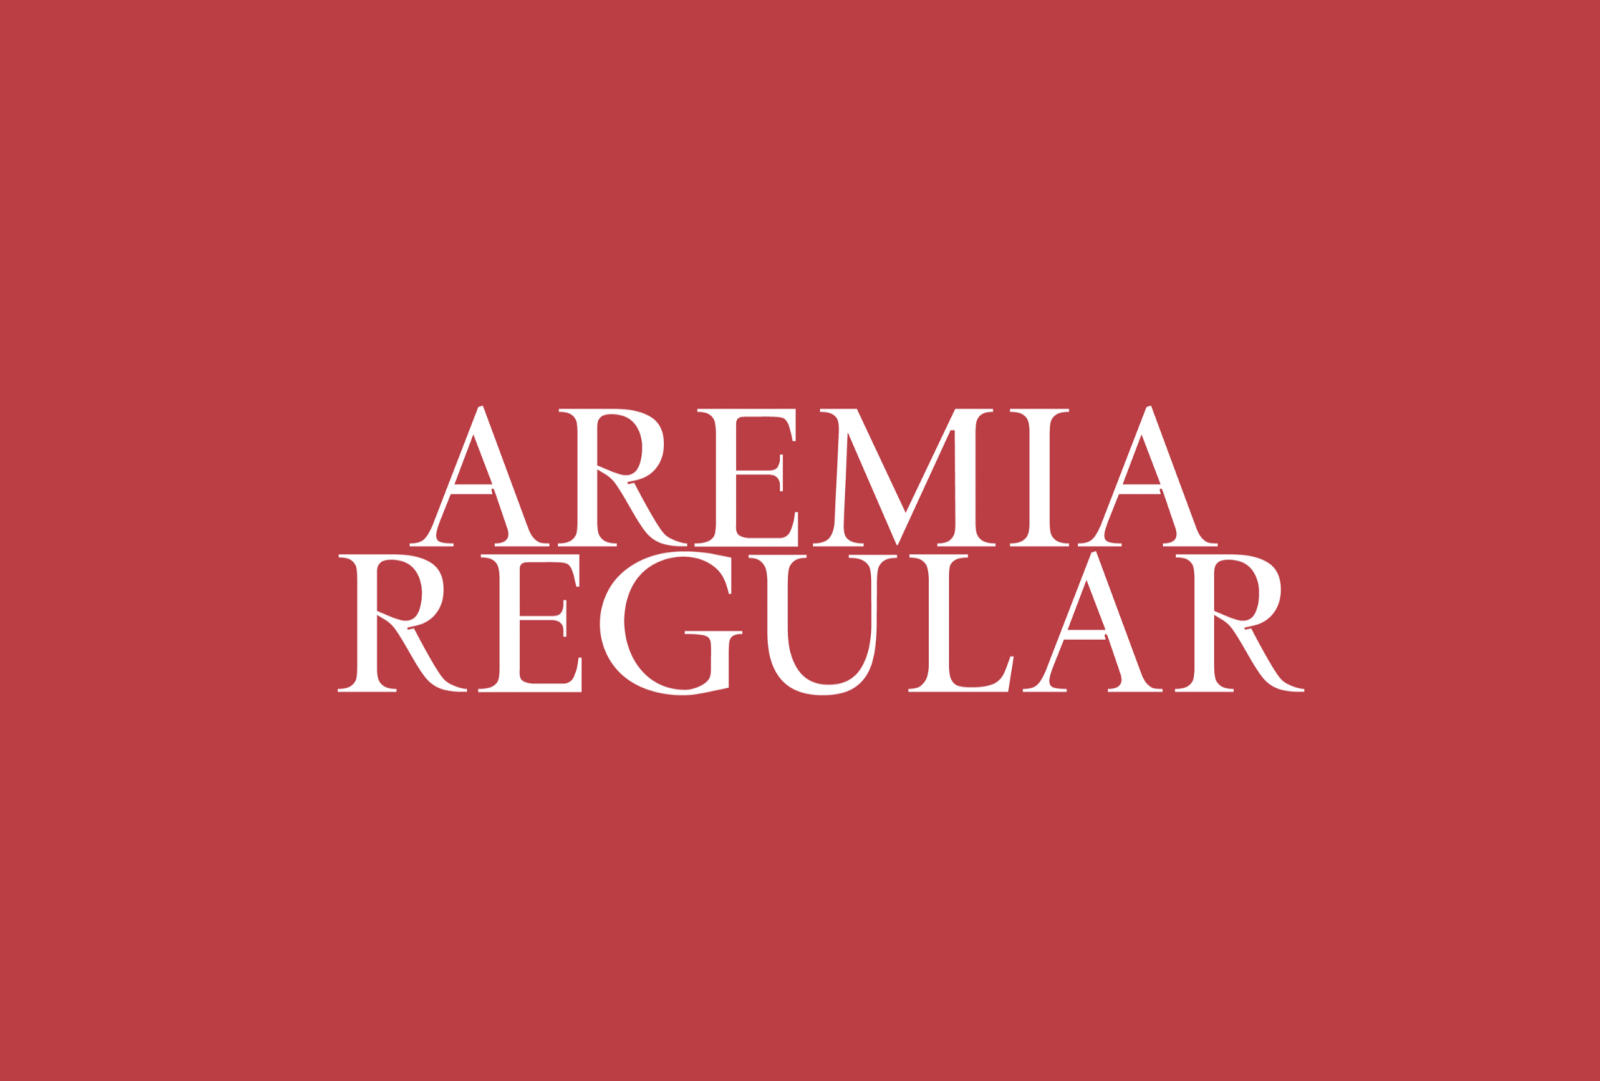 Aremia Typeface Integrates Contemporary Aesthetics to Classic Form